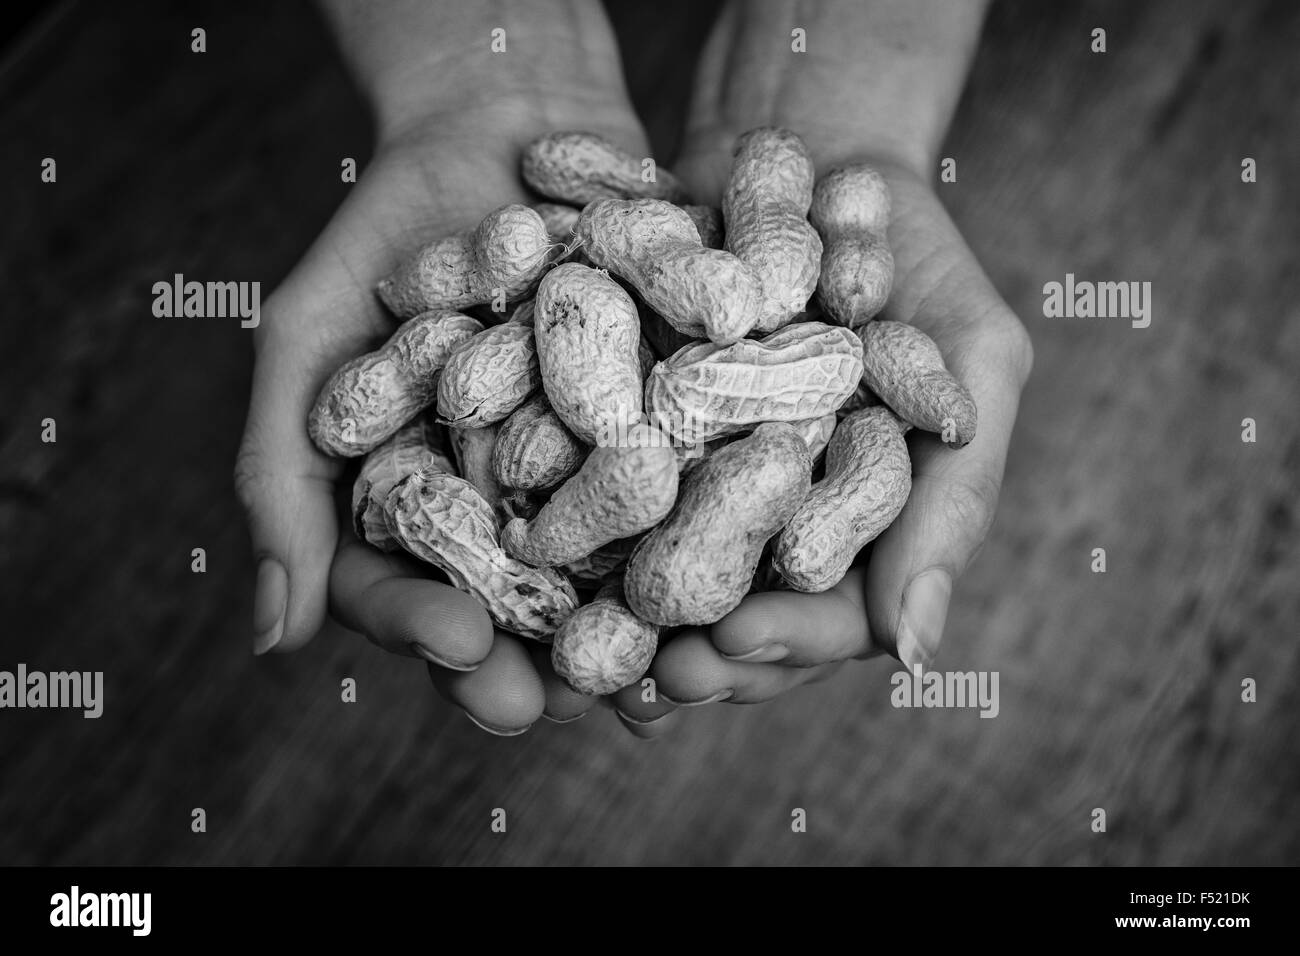 hands holding monkey nuts, black & white Stock Photo